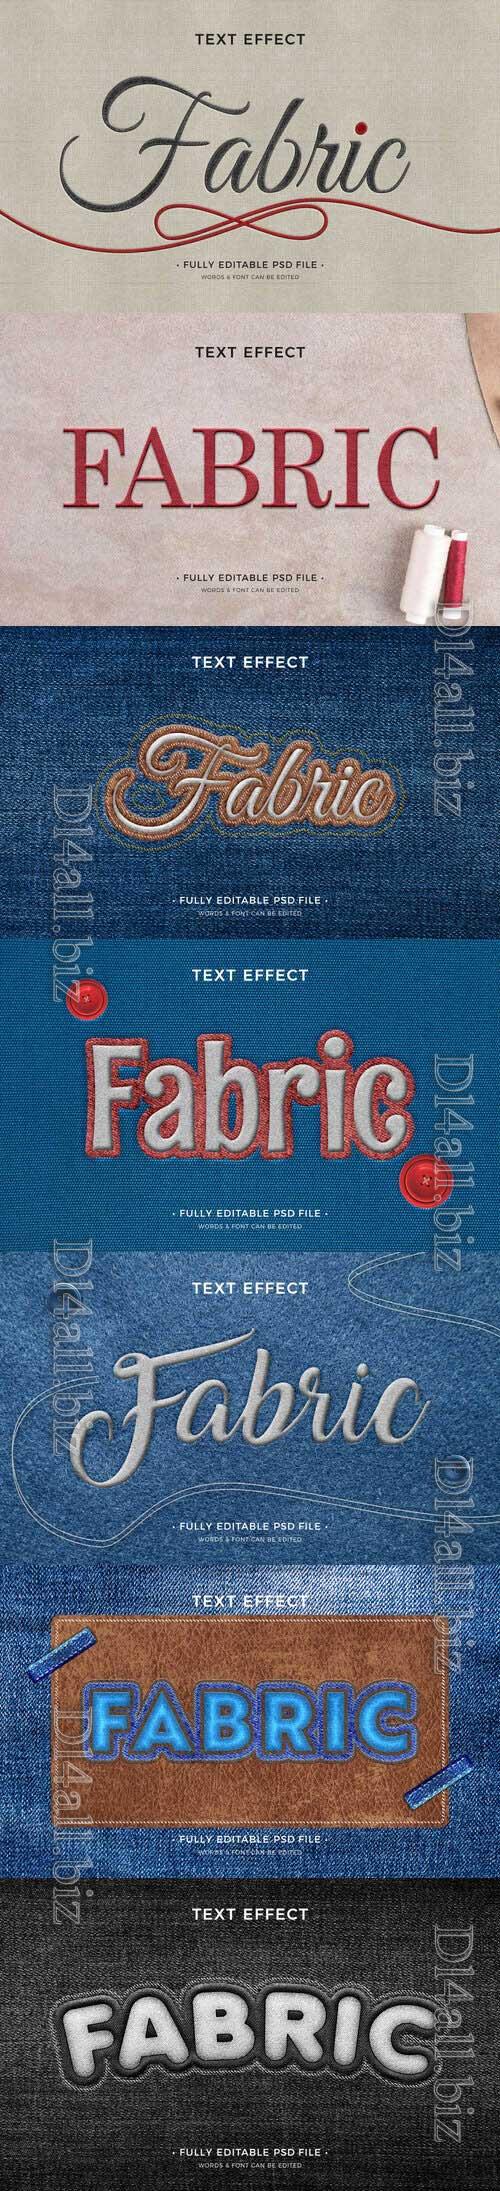 PSD fabric text effect